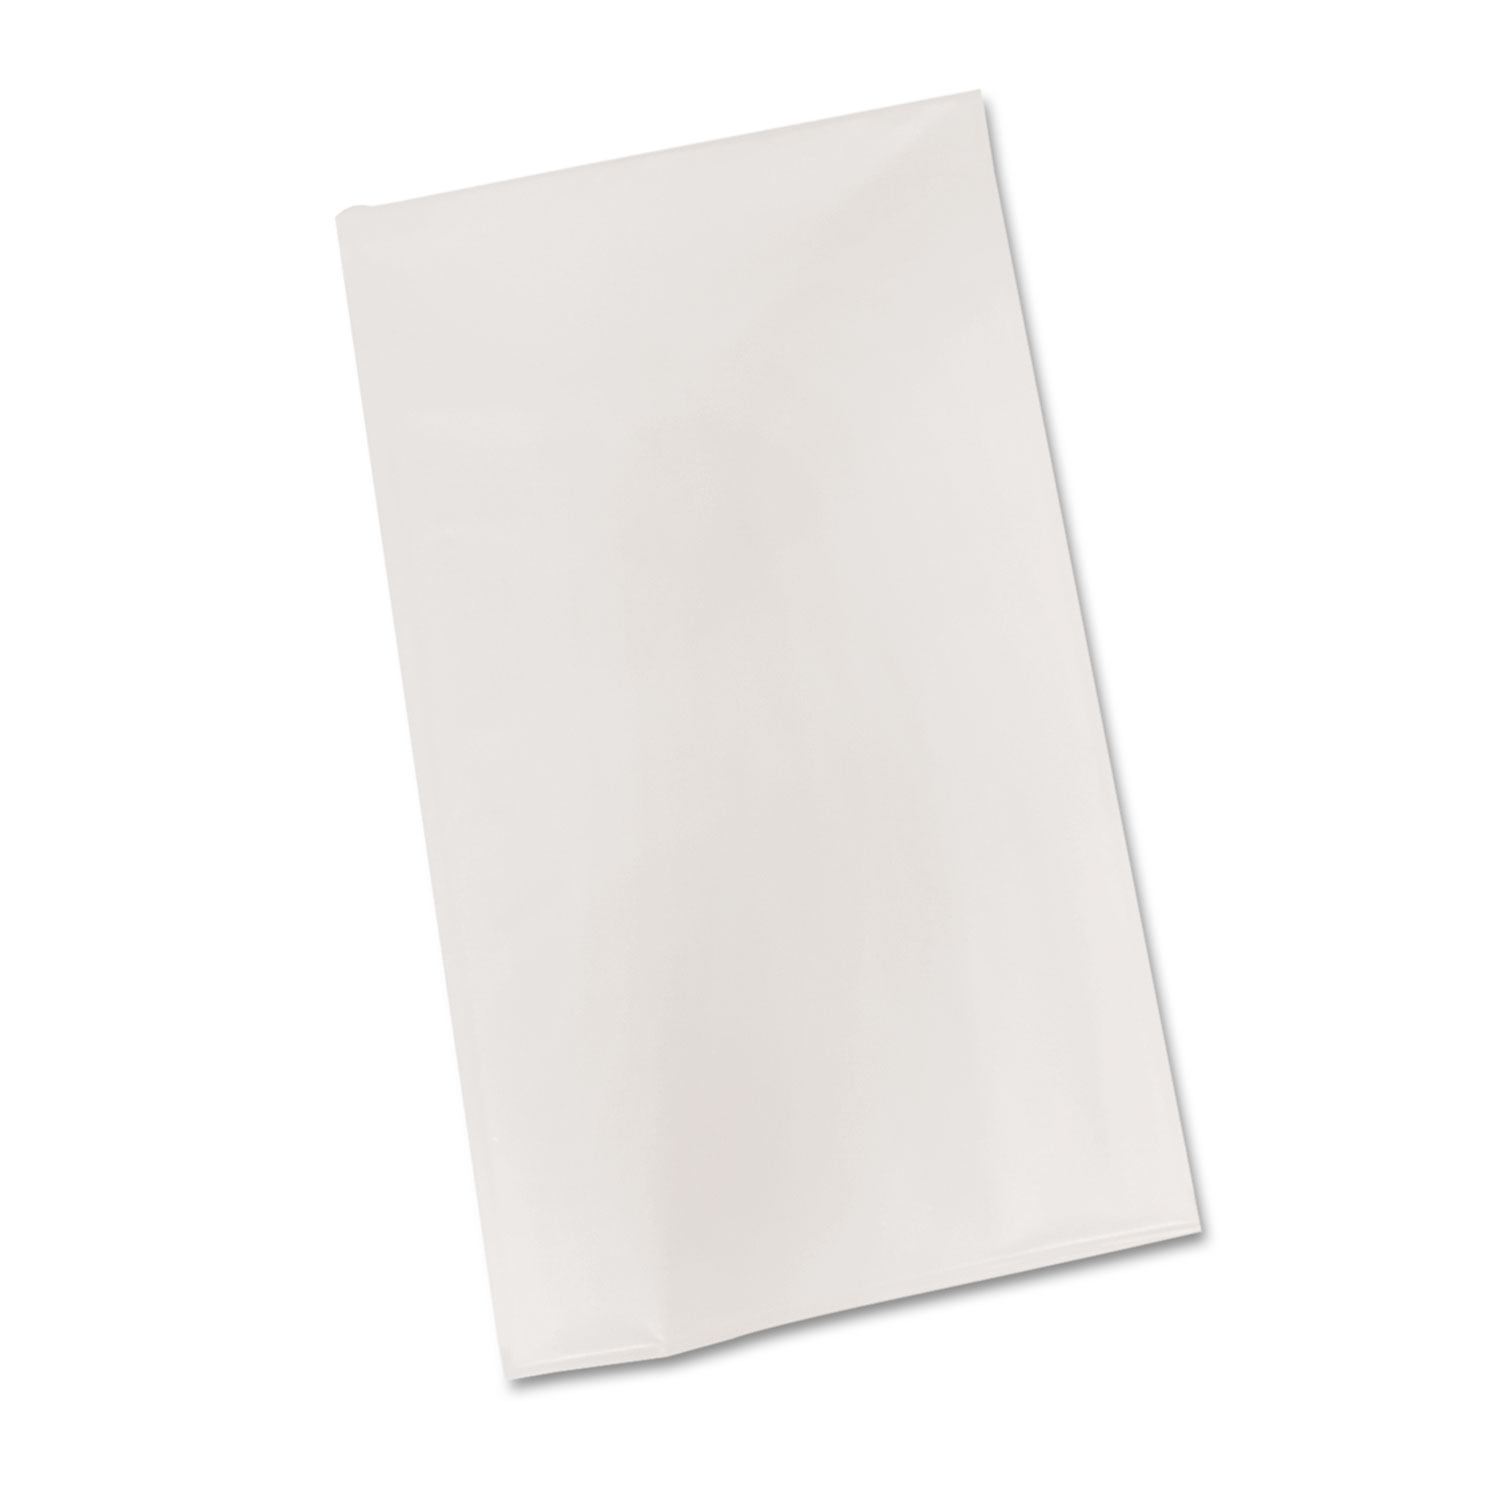  Tablemate BIO549WH Bio-Degradable Plastic Table Cover, 54 x 108, White, 6/Pack (TBLBIO549WH) 